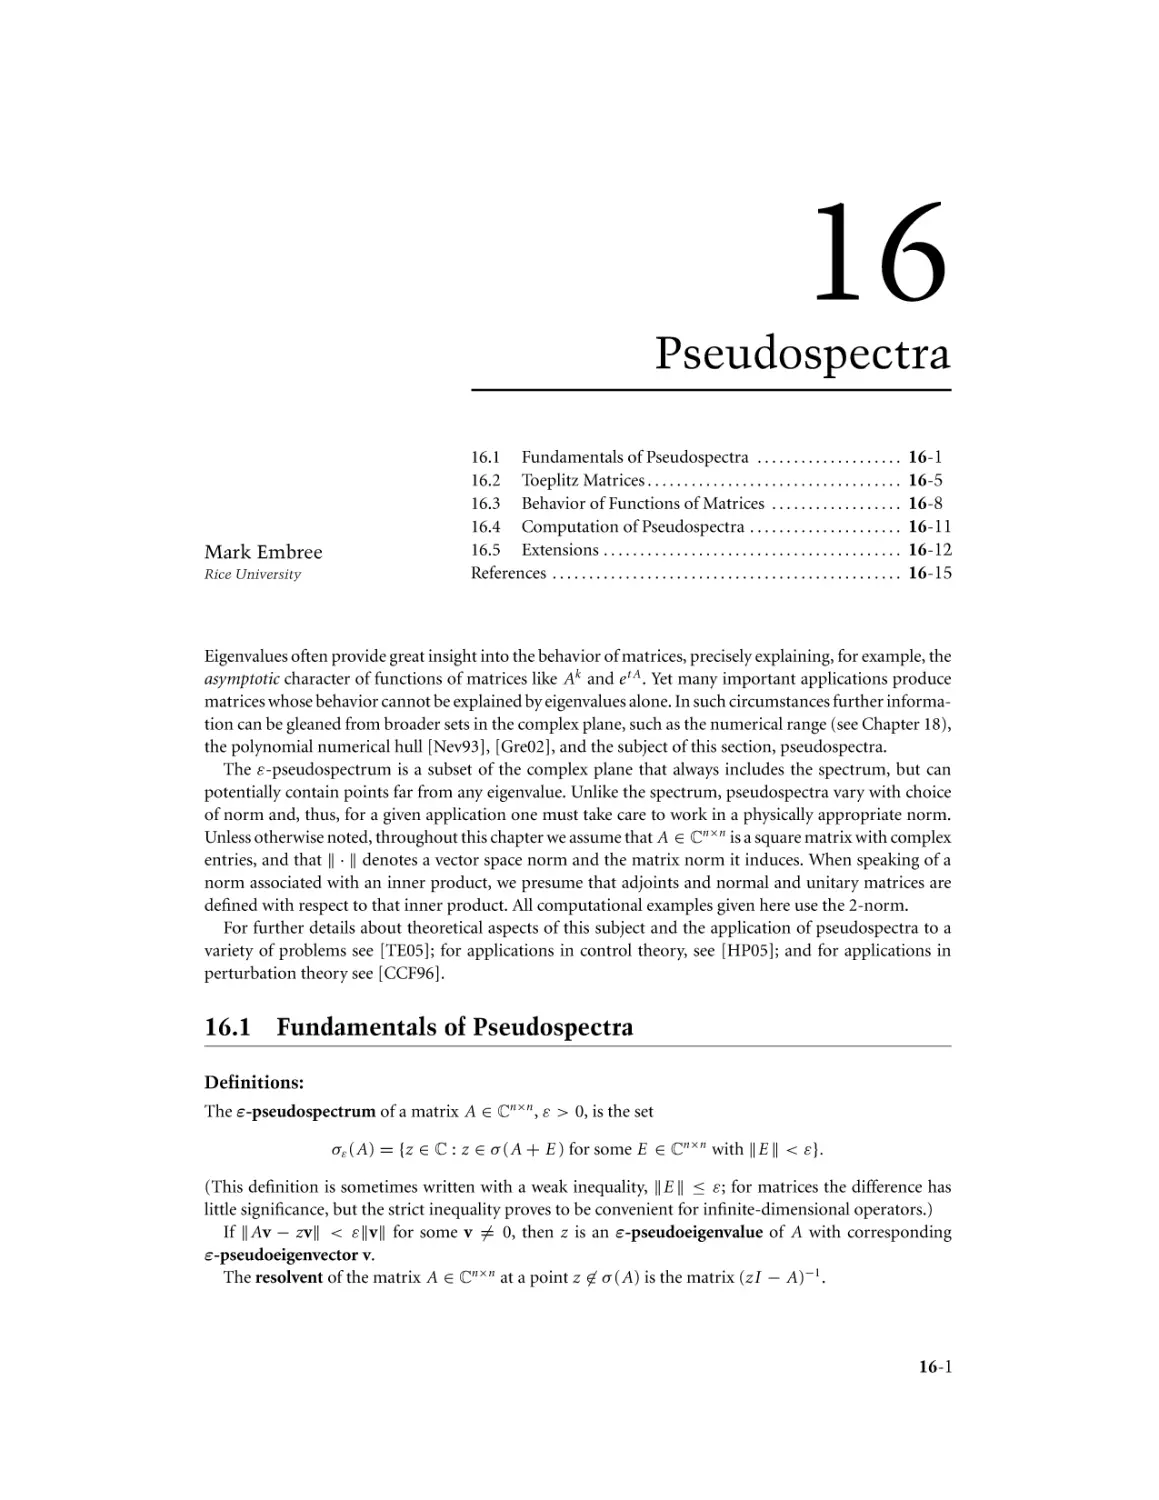 Chapter 16. Pseudospectra